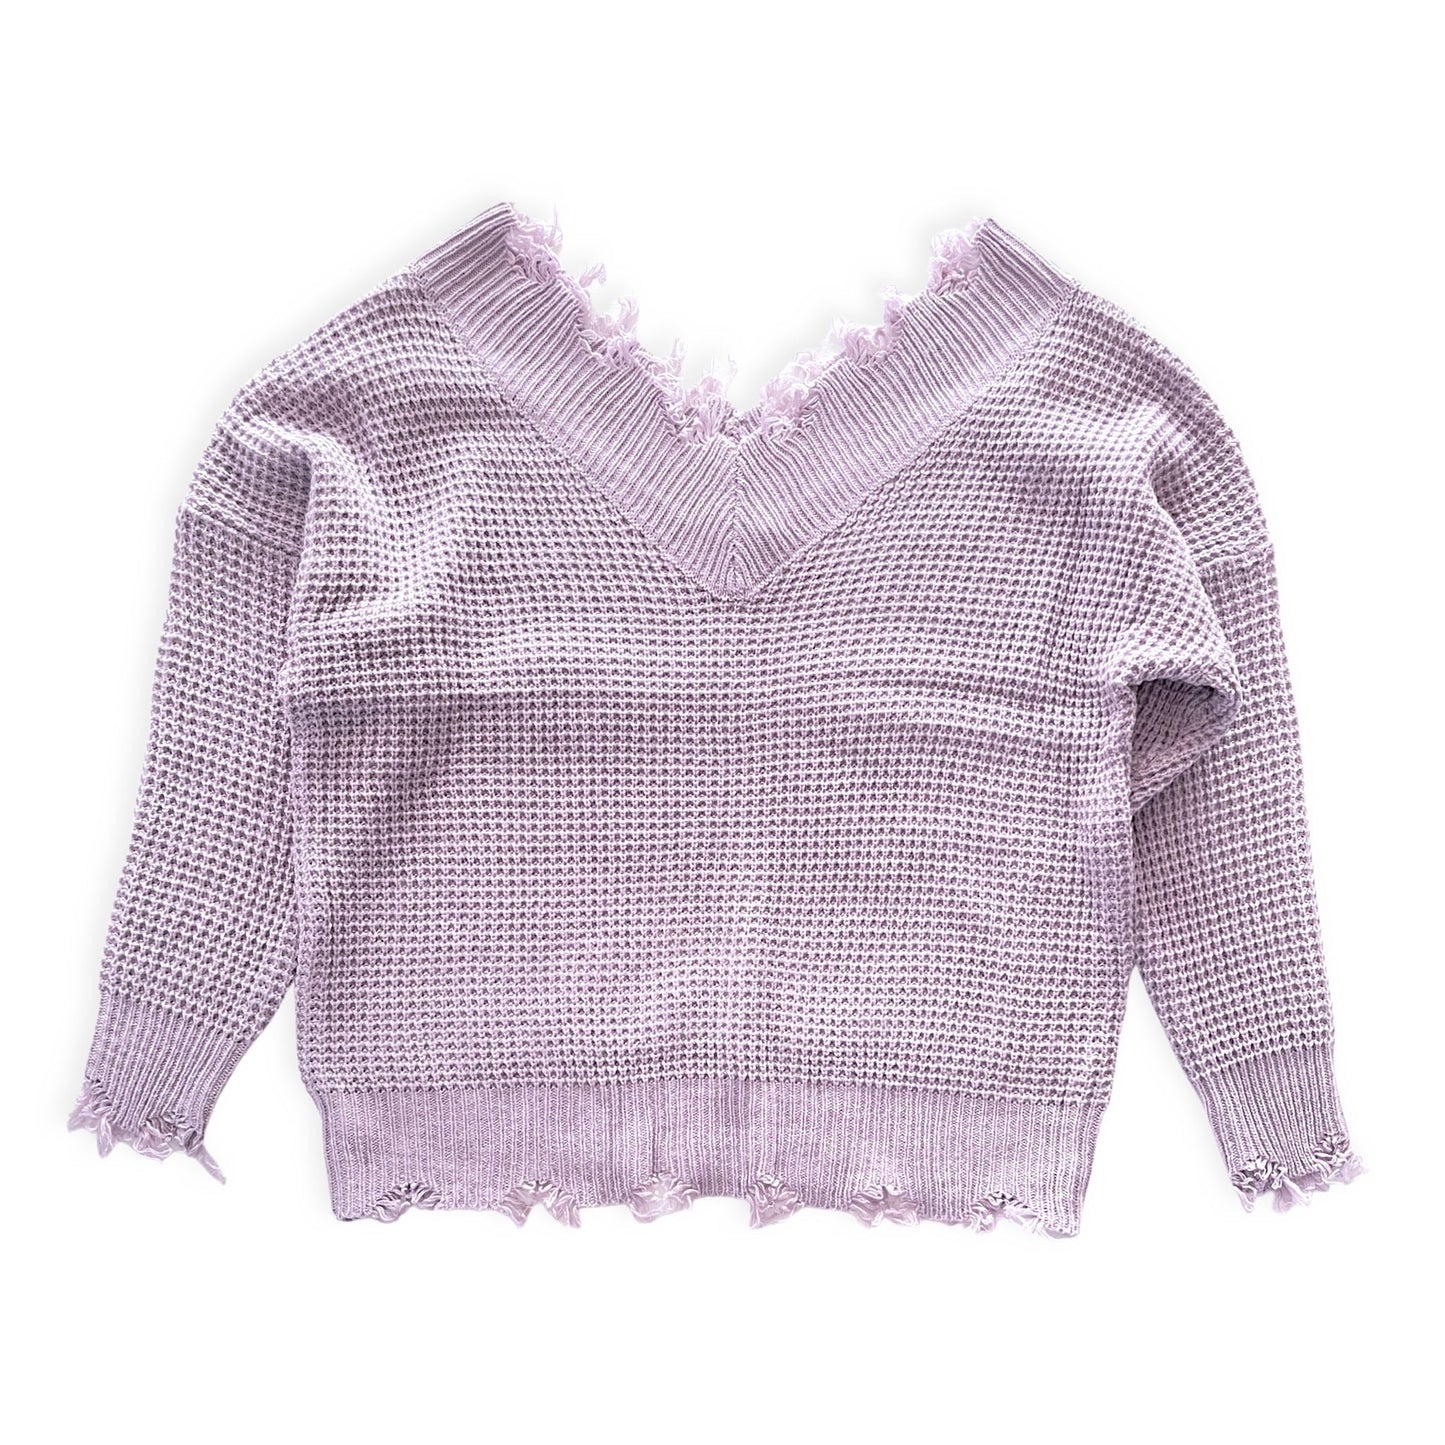 Fields of Lavender Sweater